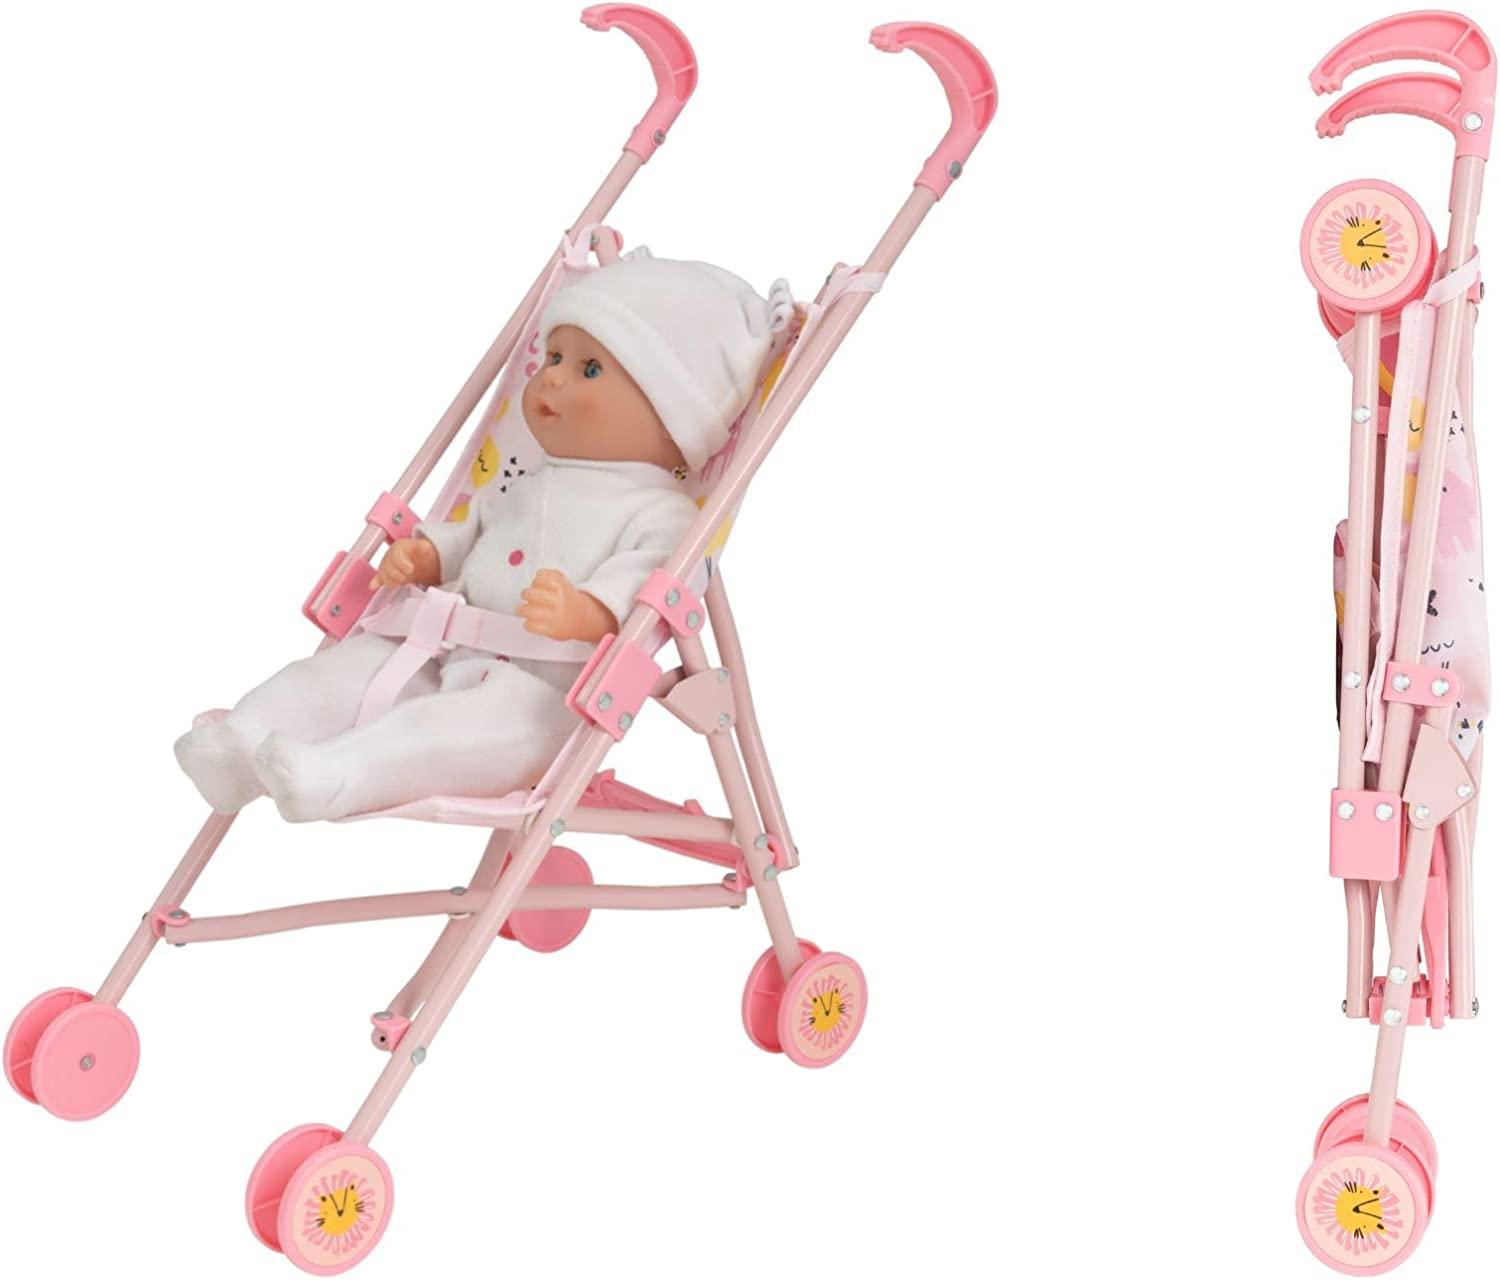 BabyBoo Pink Jungle Single Stroller Pram Doll Toy